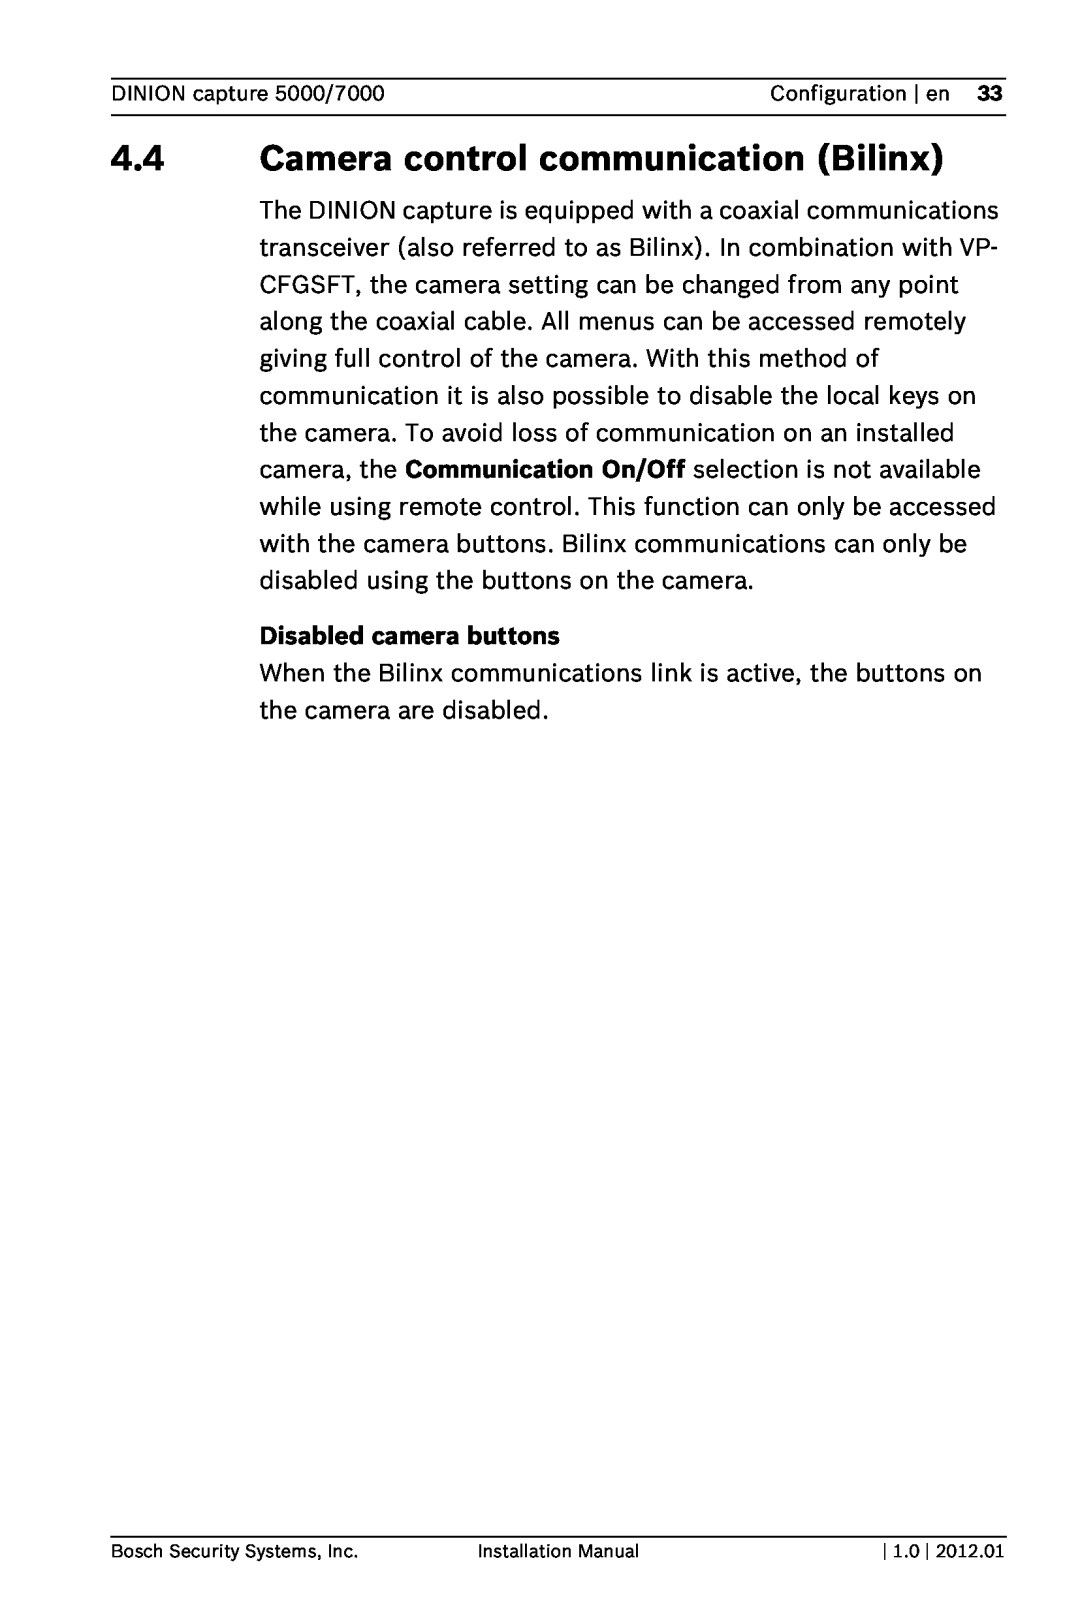 Bosch Appliances 7000, 5000 installation manual 4.4Camera control communication Bilinx, Disabled camera buttons 